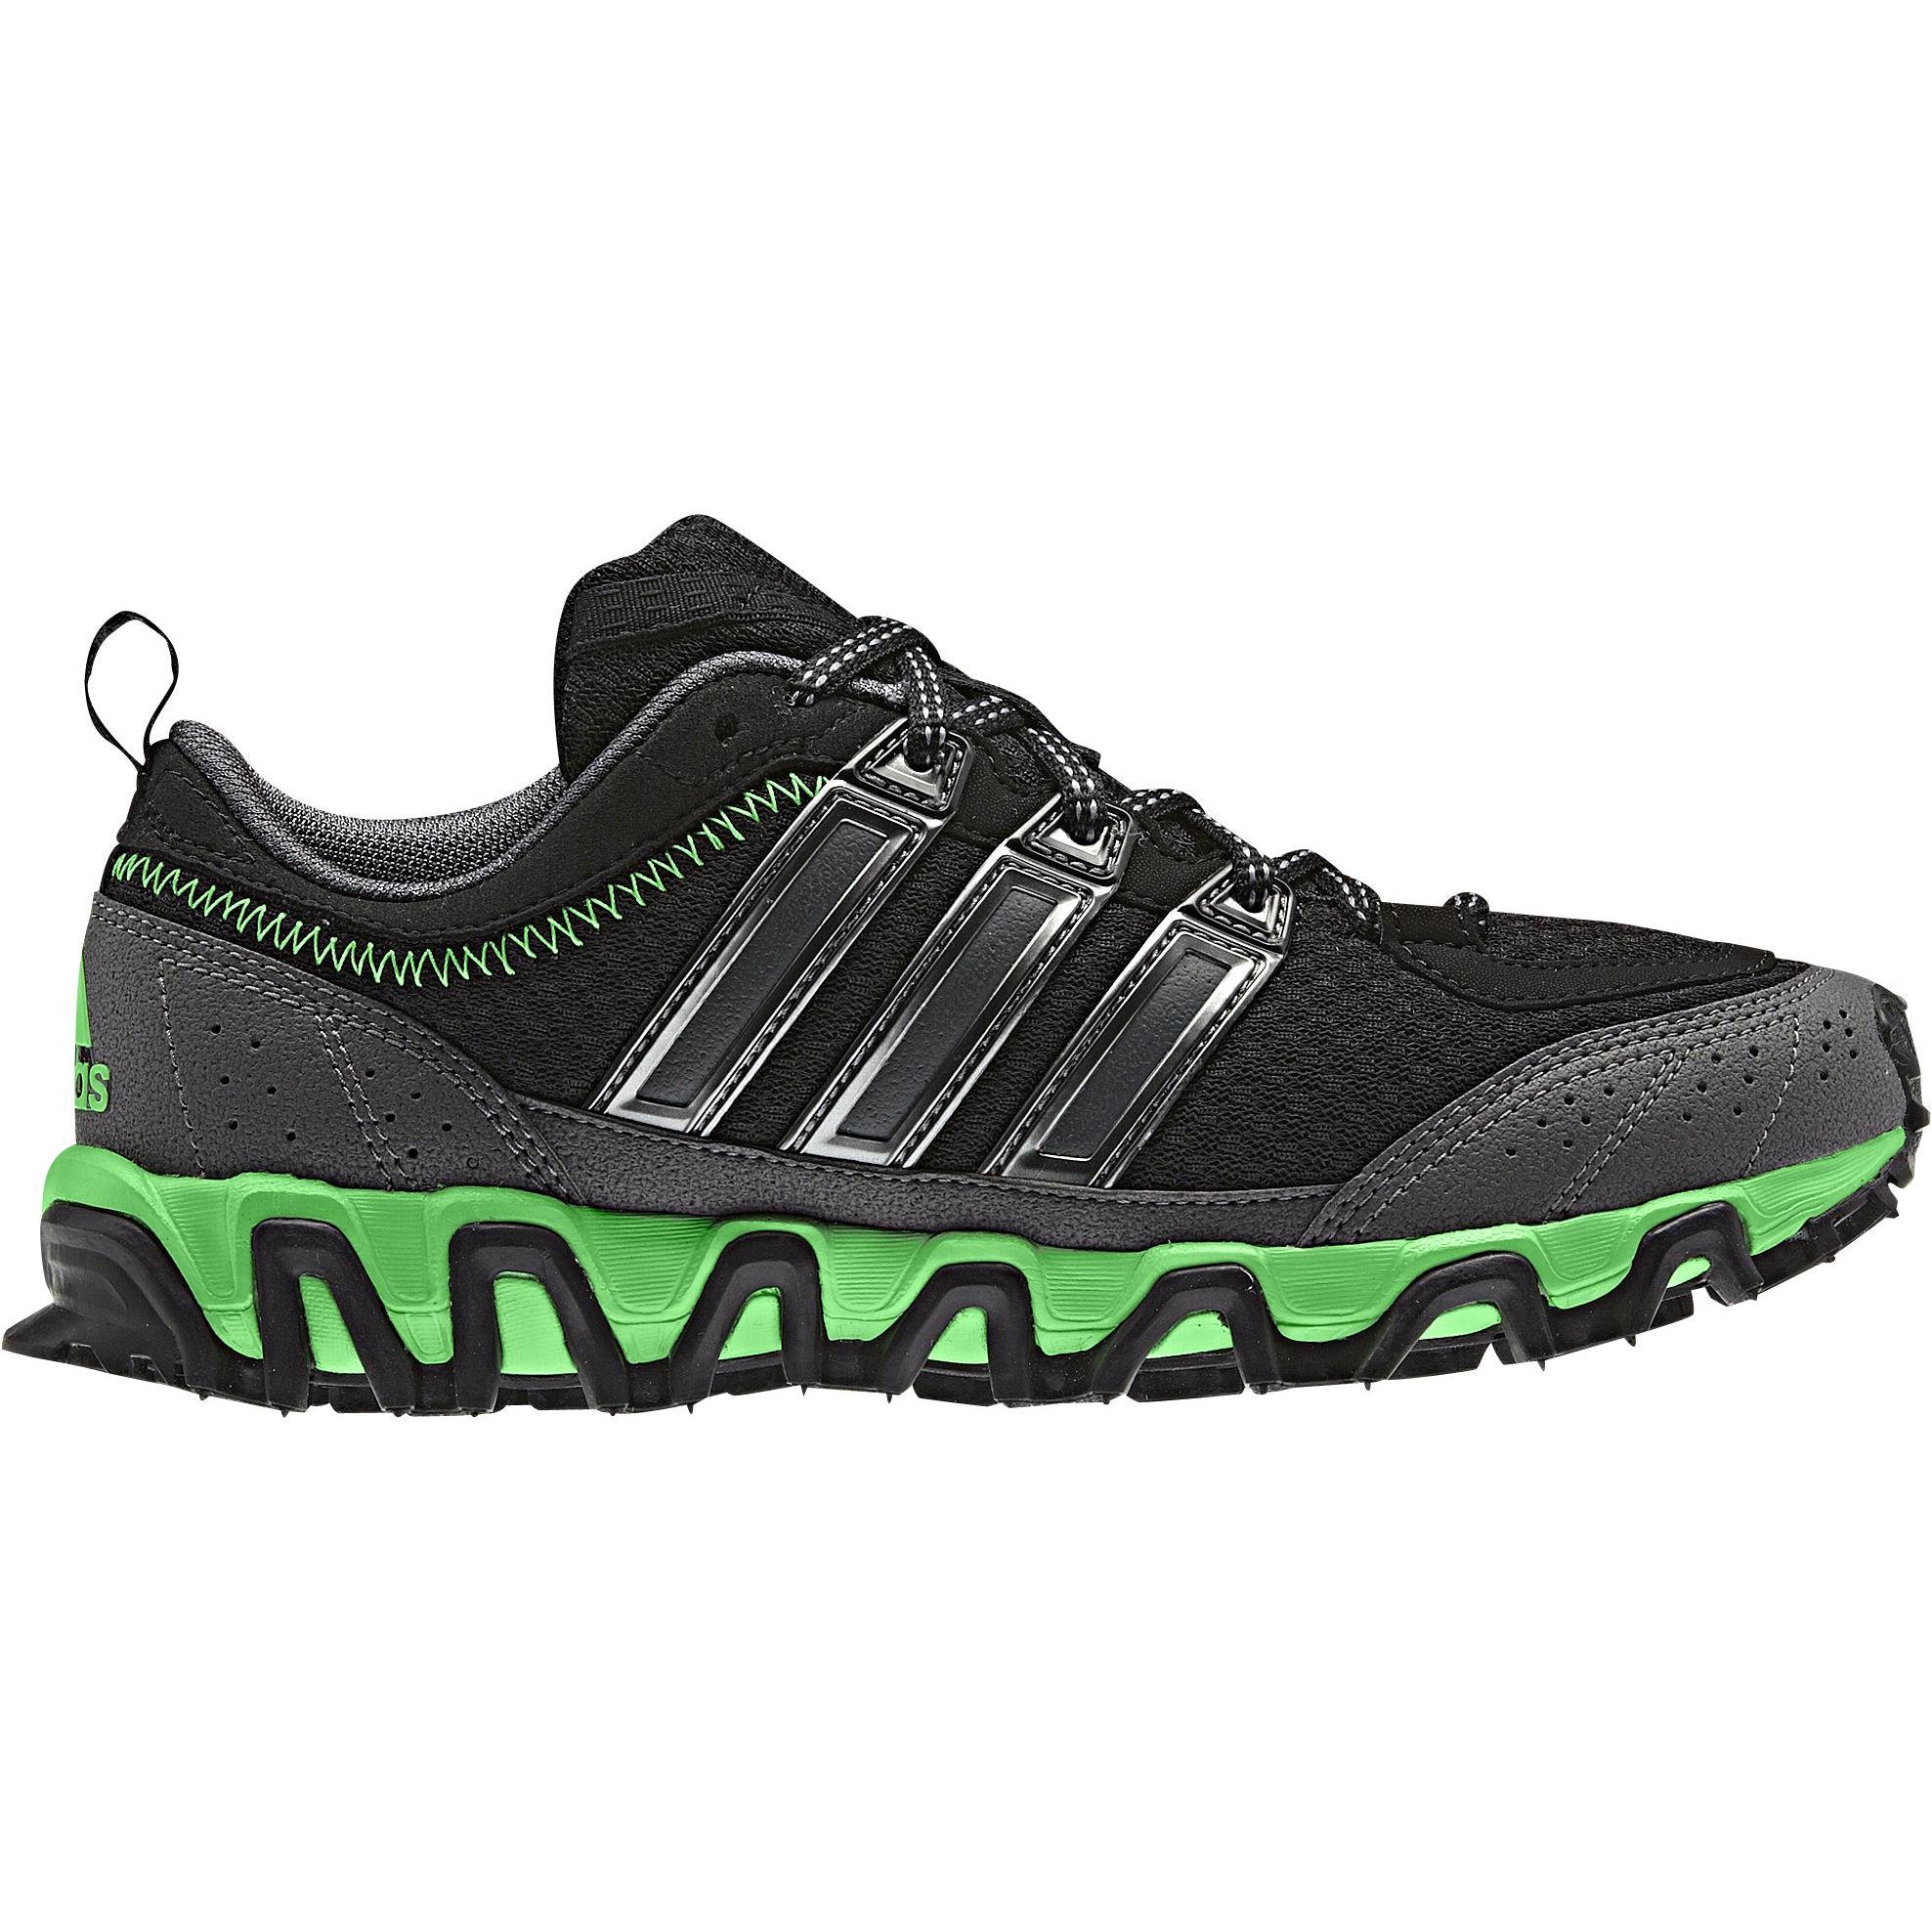 Foto Zapatillas para niños Adidas - KX TR XJ - UK 13.5 Black/Iron/Zest foto 584395